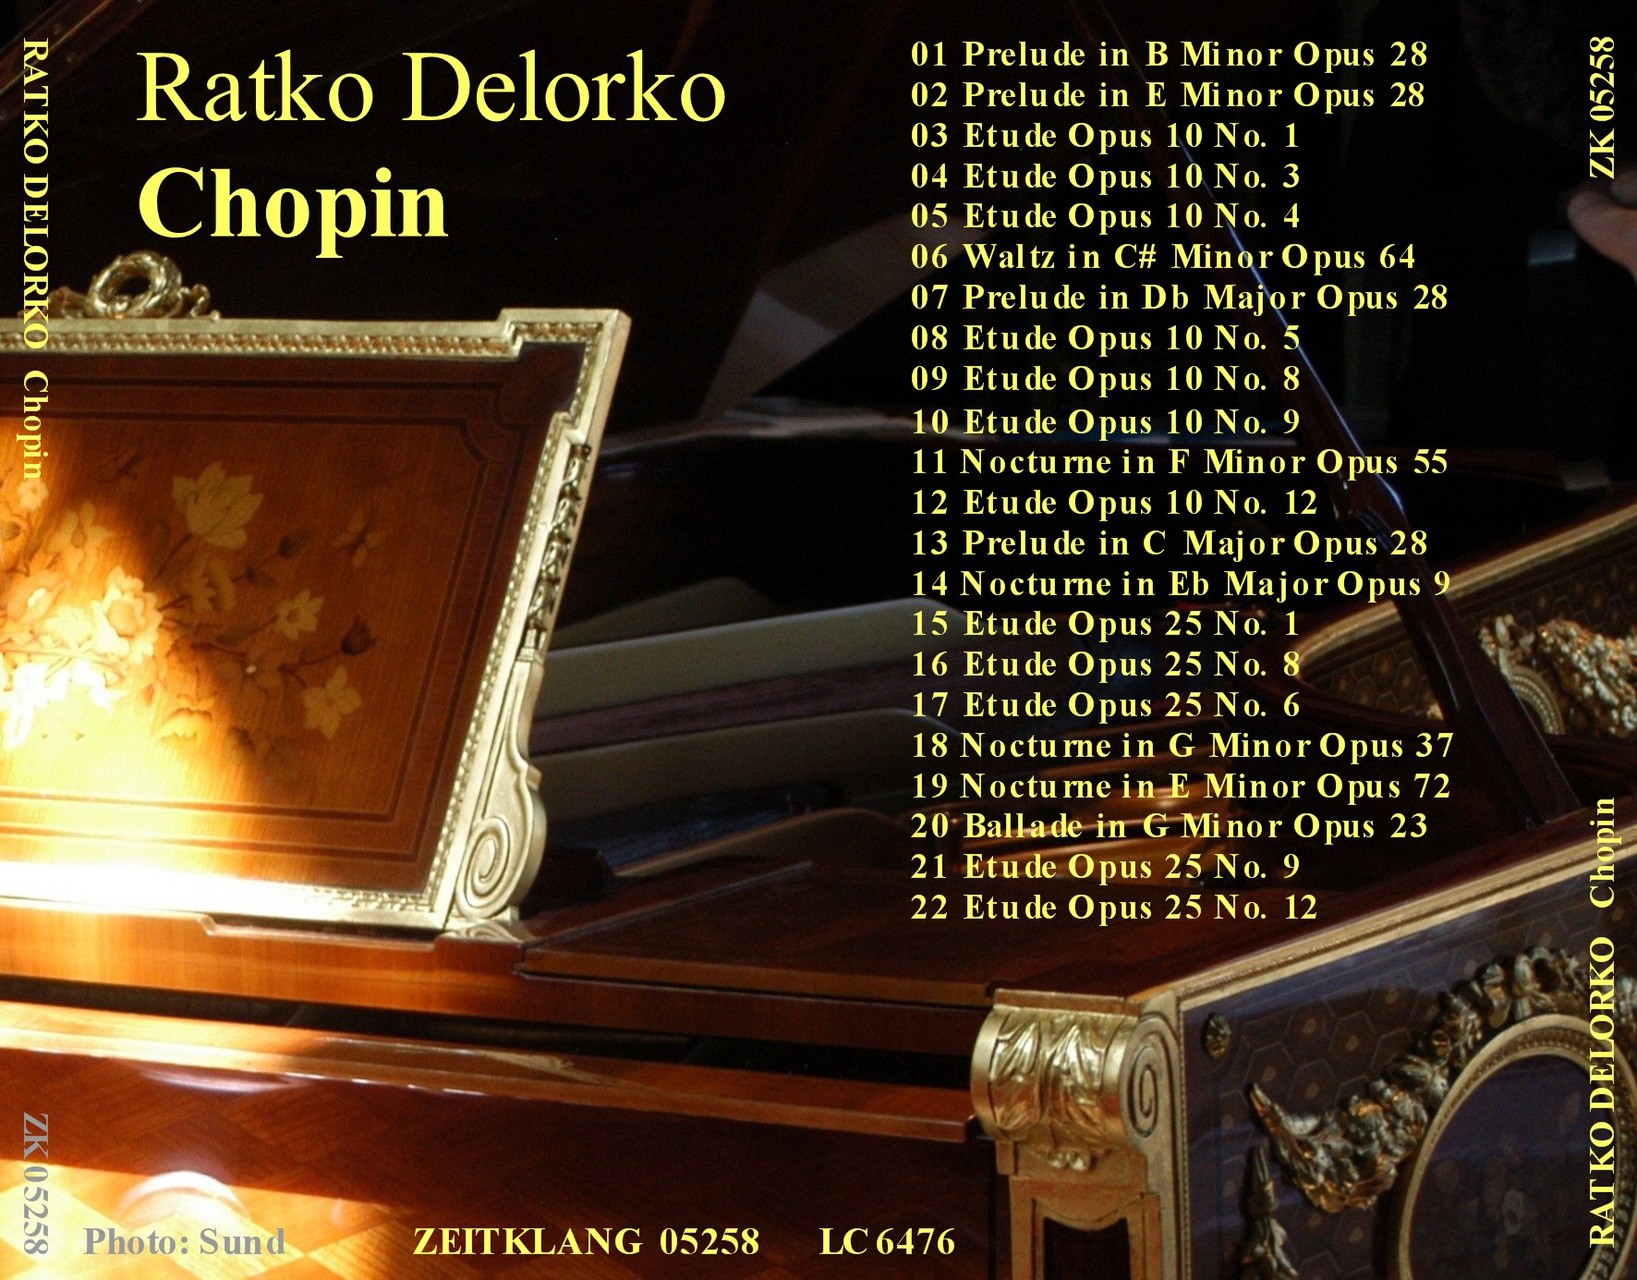 Ratko Delorko Recordings